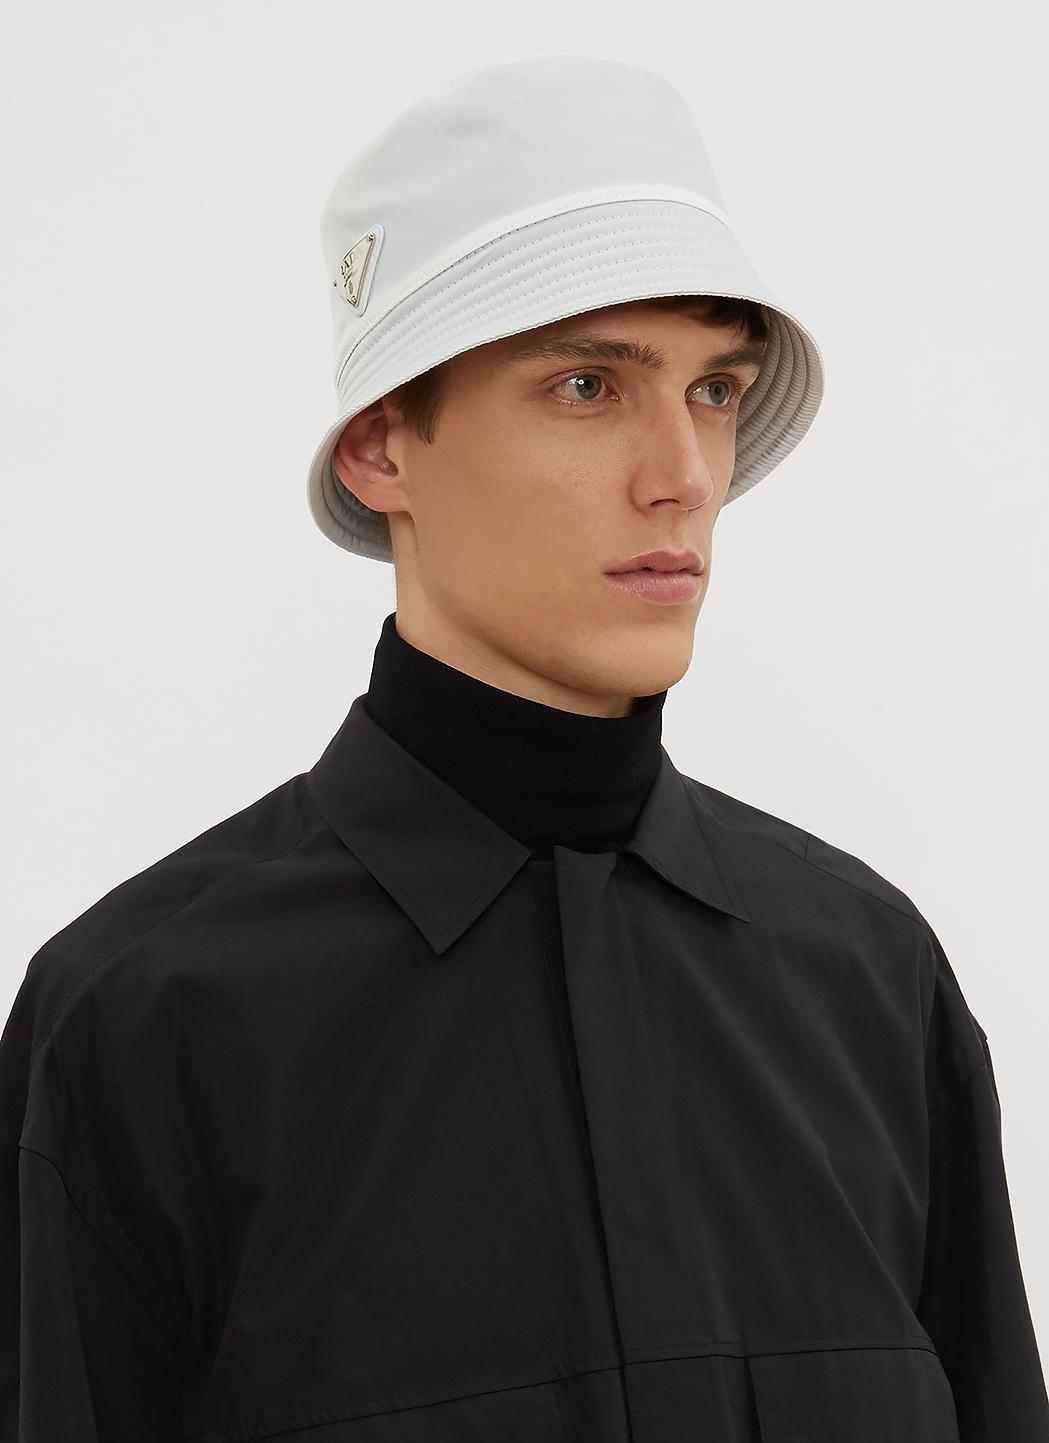 Prada Nylon Logo Bucket Hat In White for Men